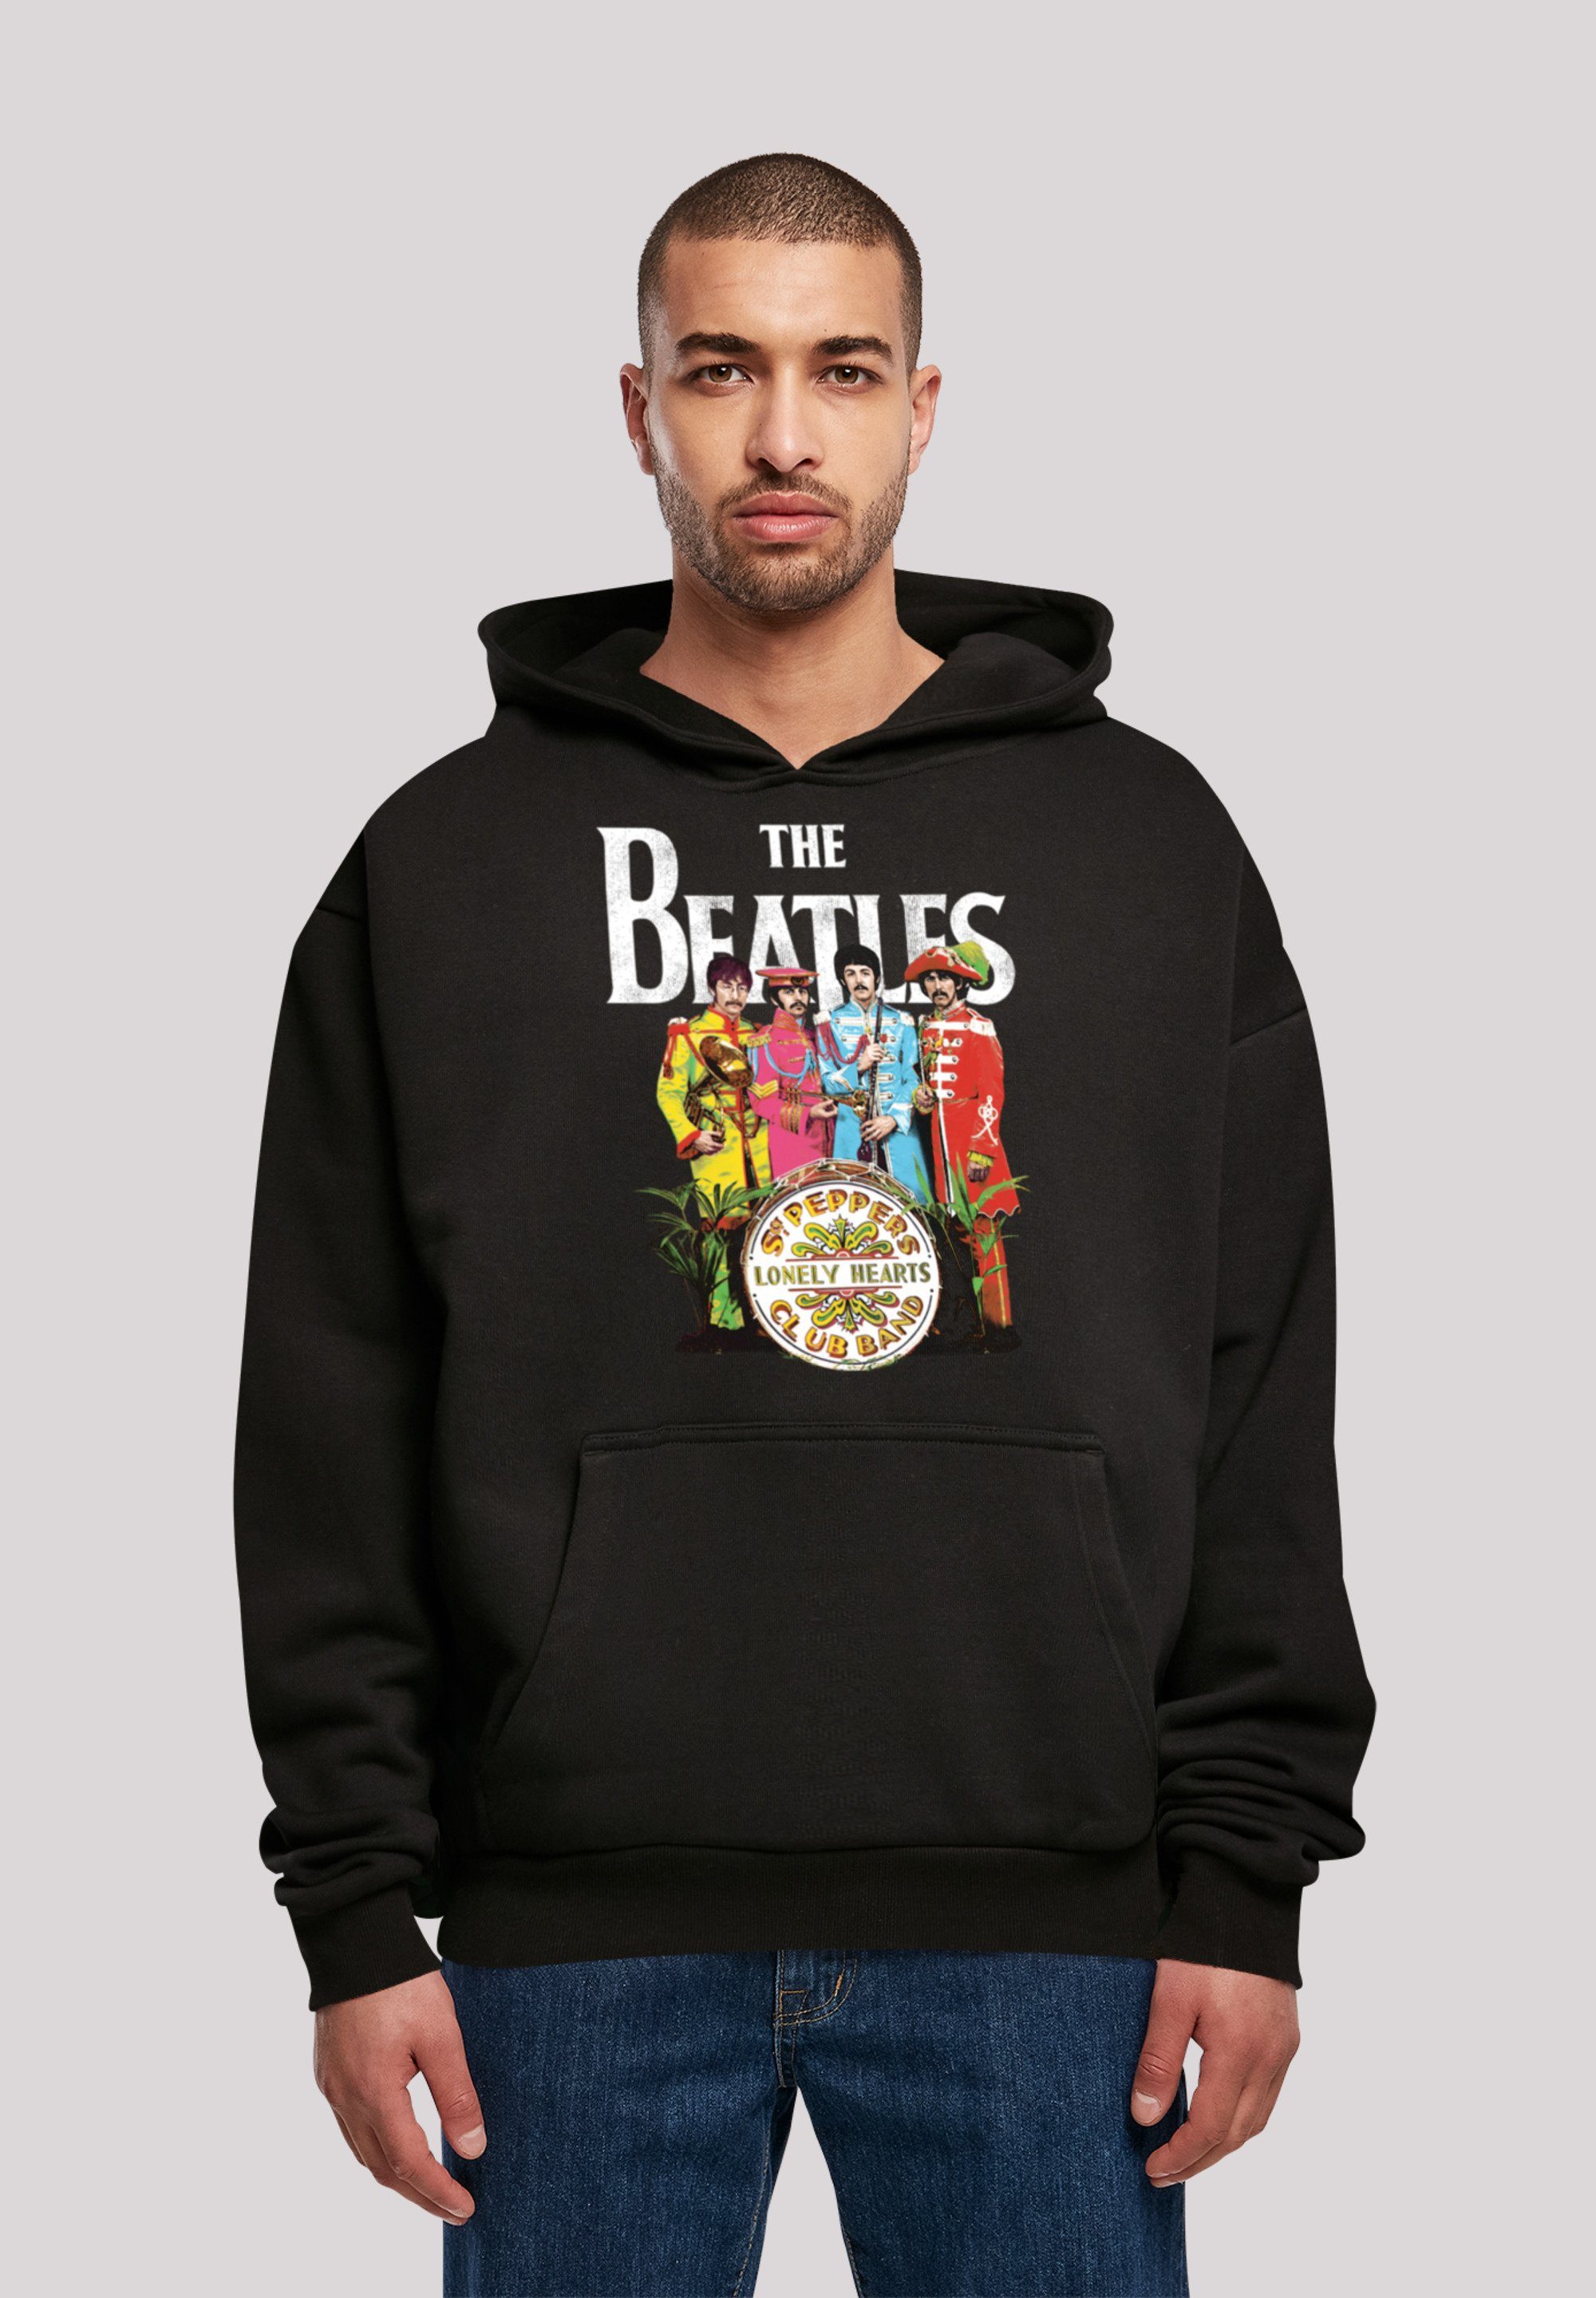 180 Pepper und S ist Beatles groß The Sgt Kapuzenpullover Größe trägt Das Model cm Print, Band Black F4NT4STIC